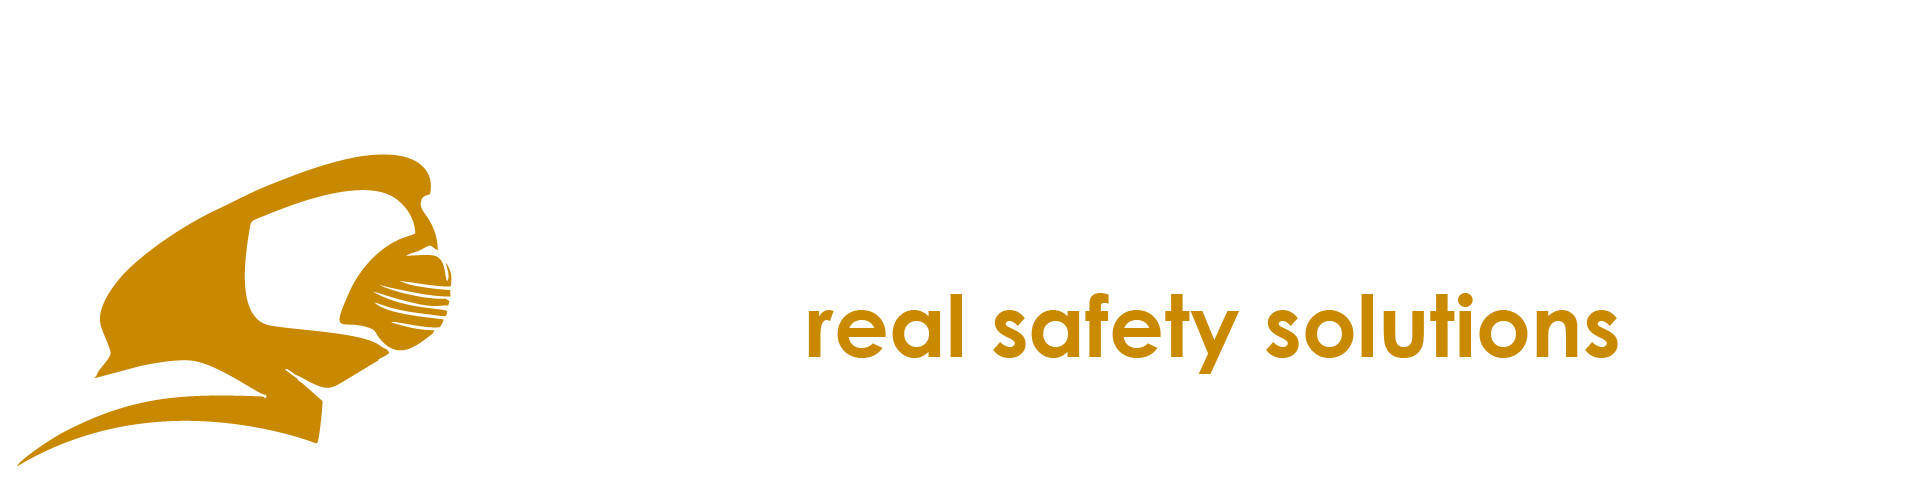 Star Safety